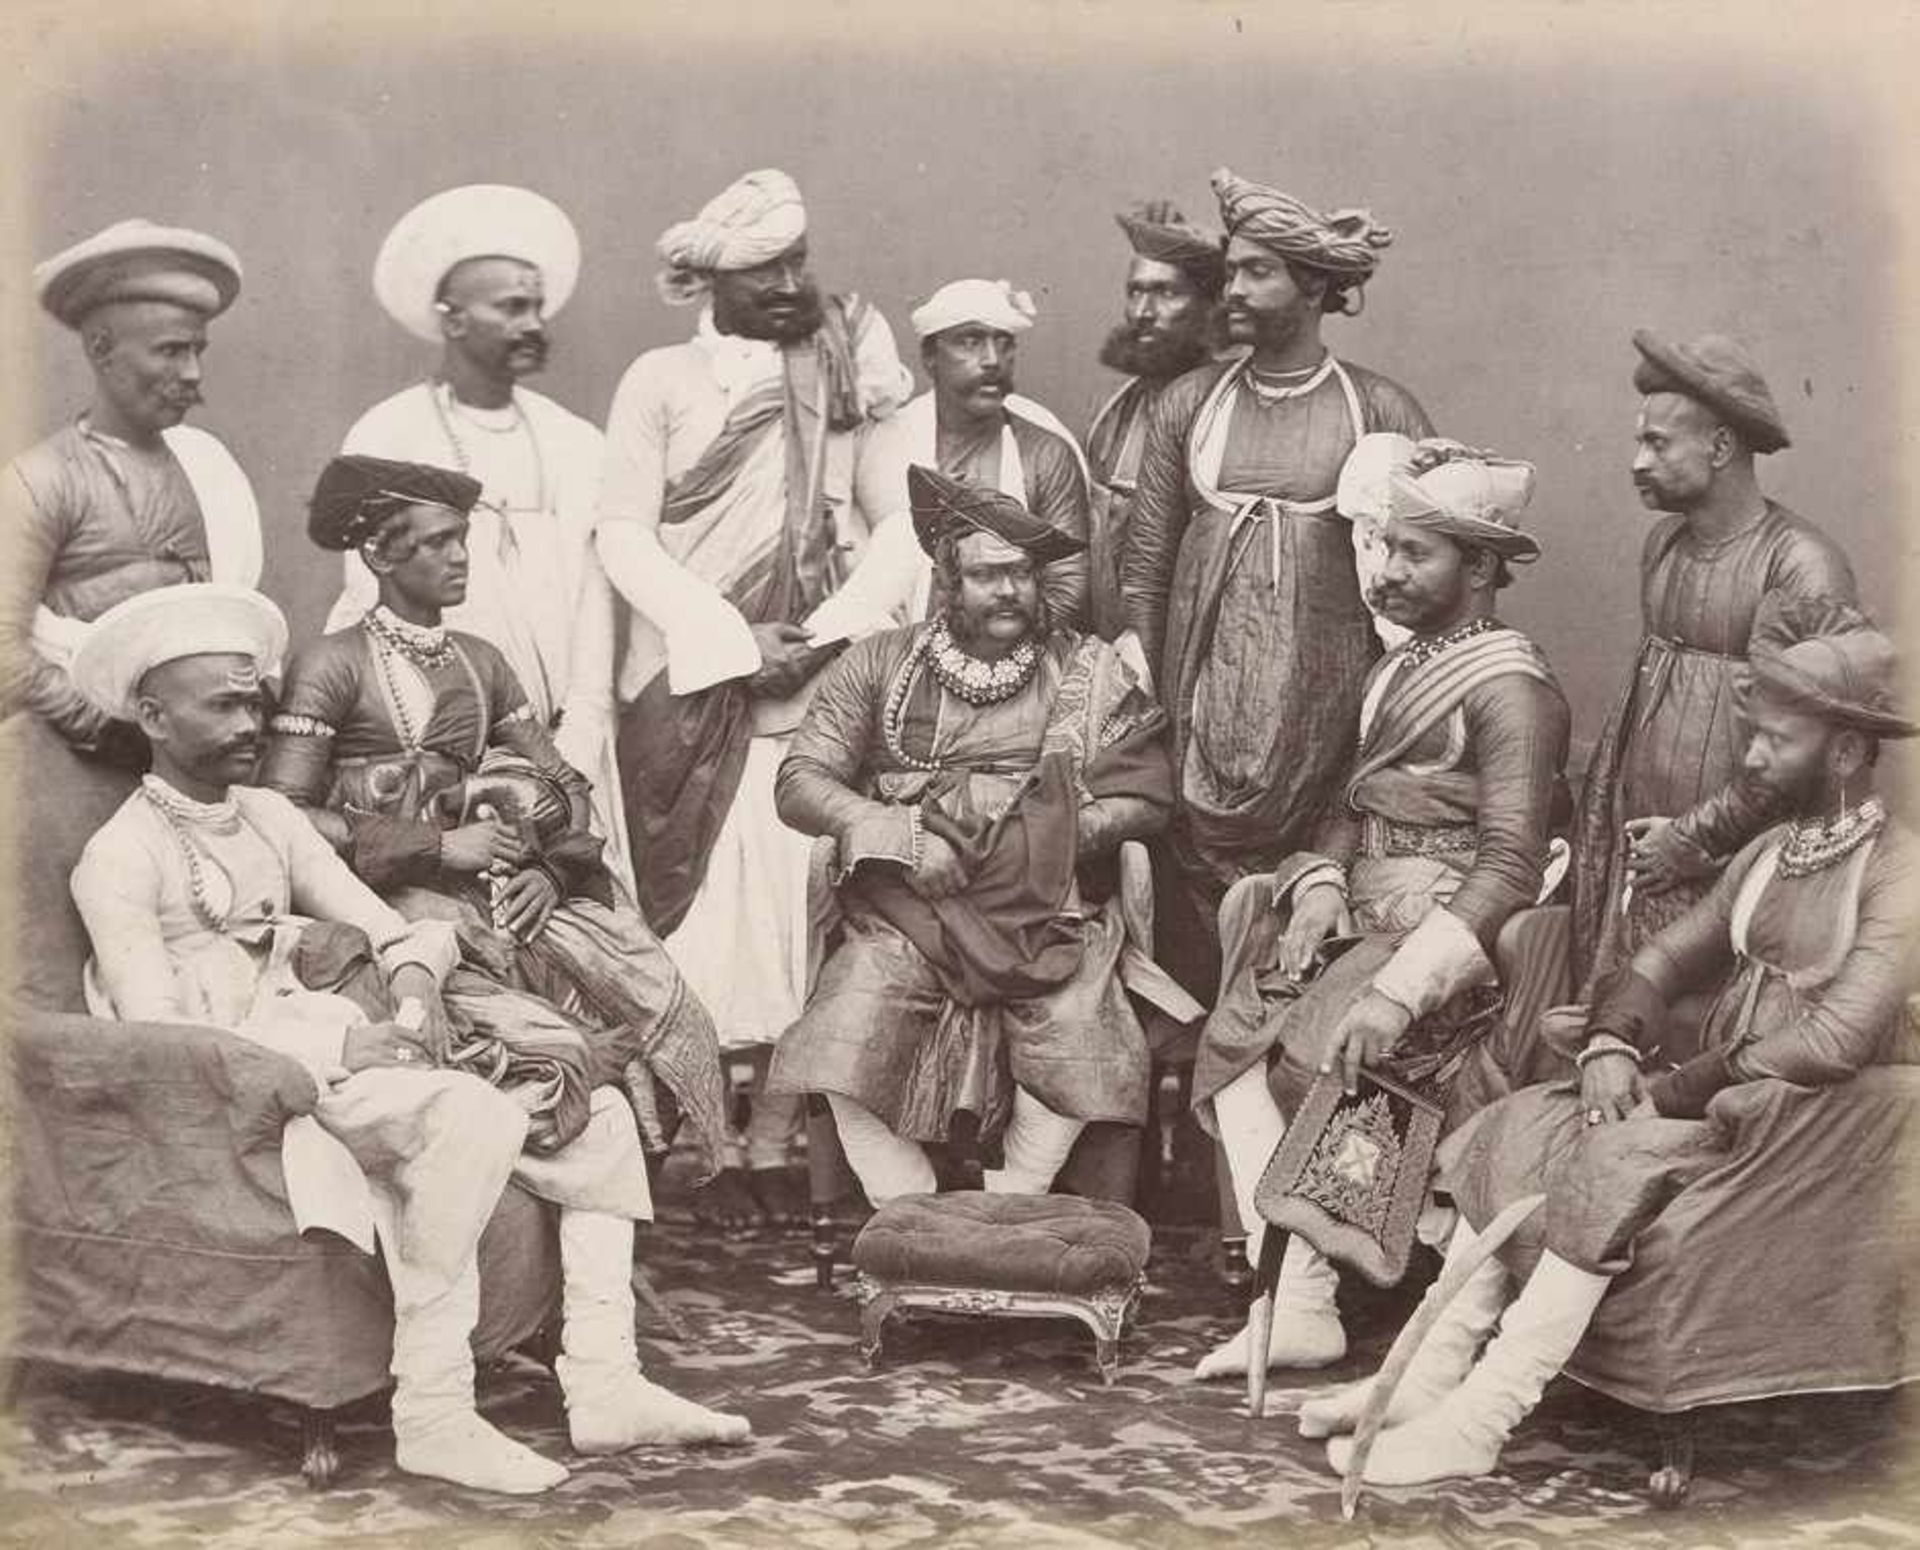 Bourne, Samuel und Shepherd, Charles: Views of India Views of India. 1860s. 13 albumen prints.